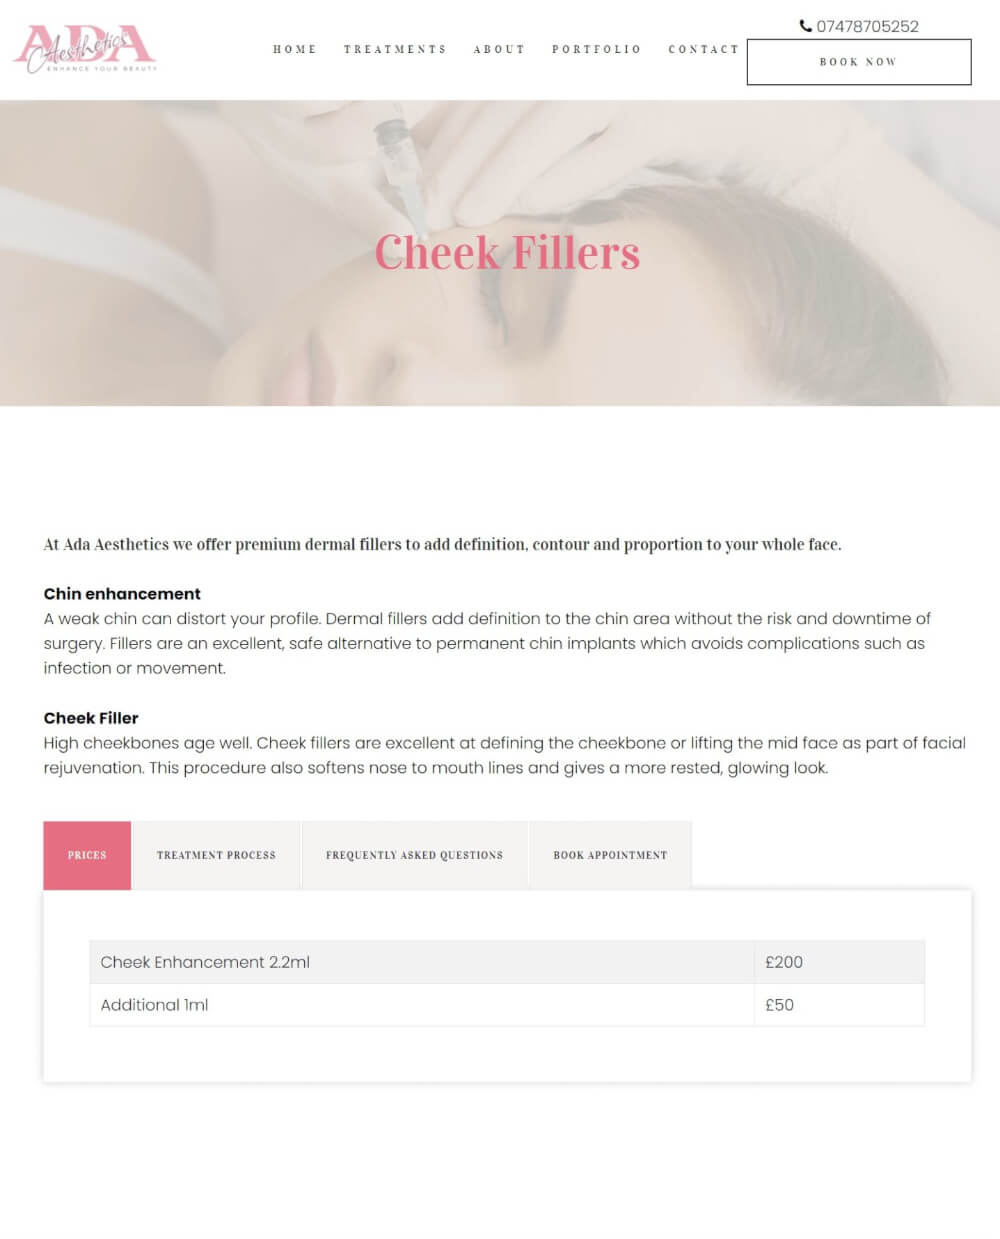 A screenshot of treatment page copywriting for Ada Aesthetics London